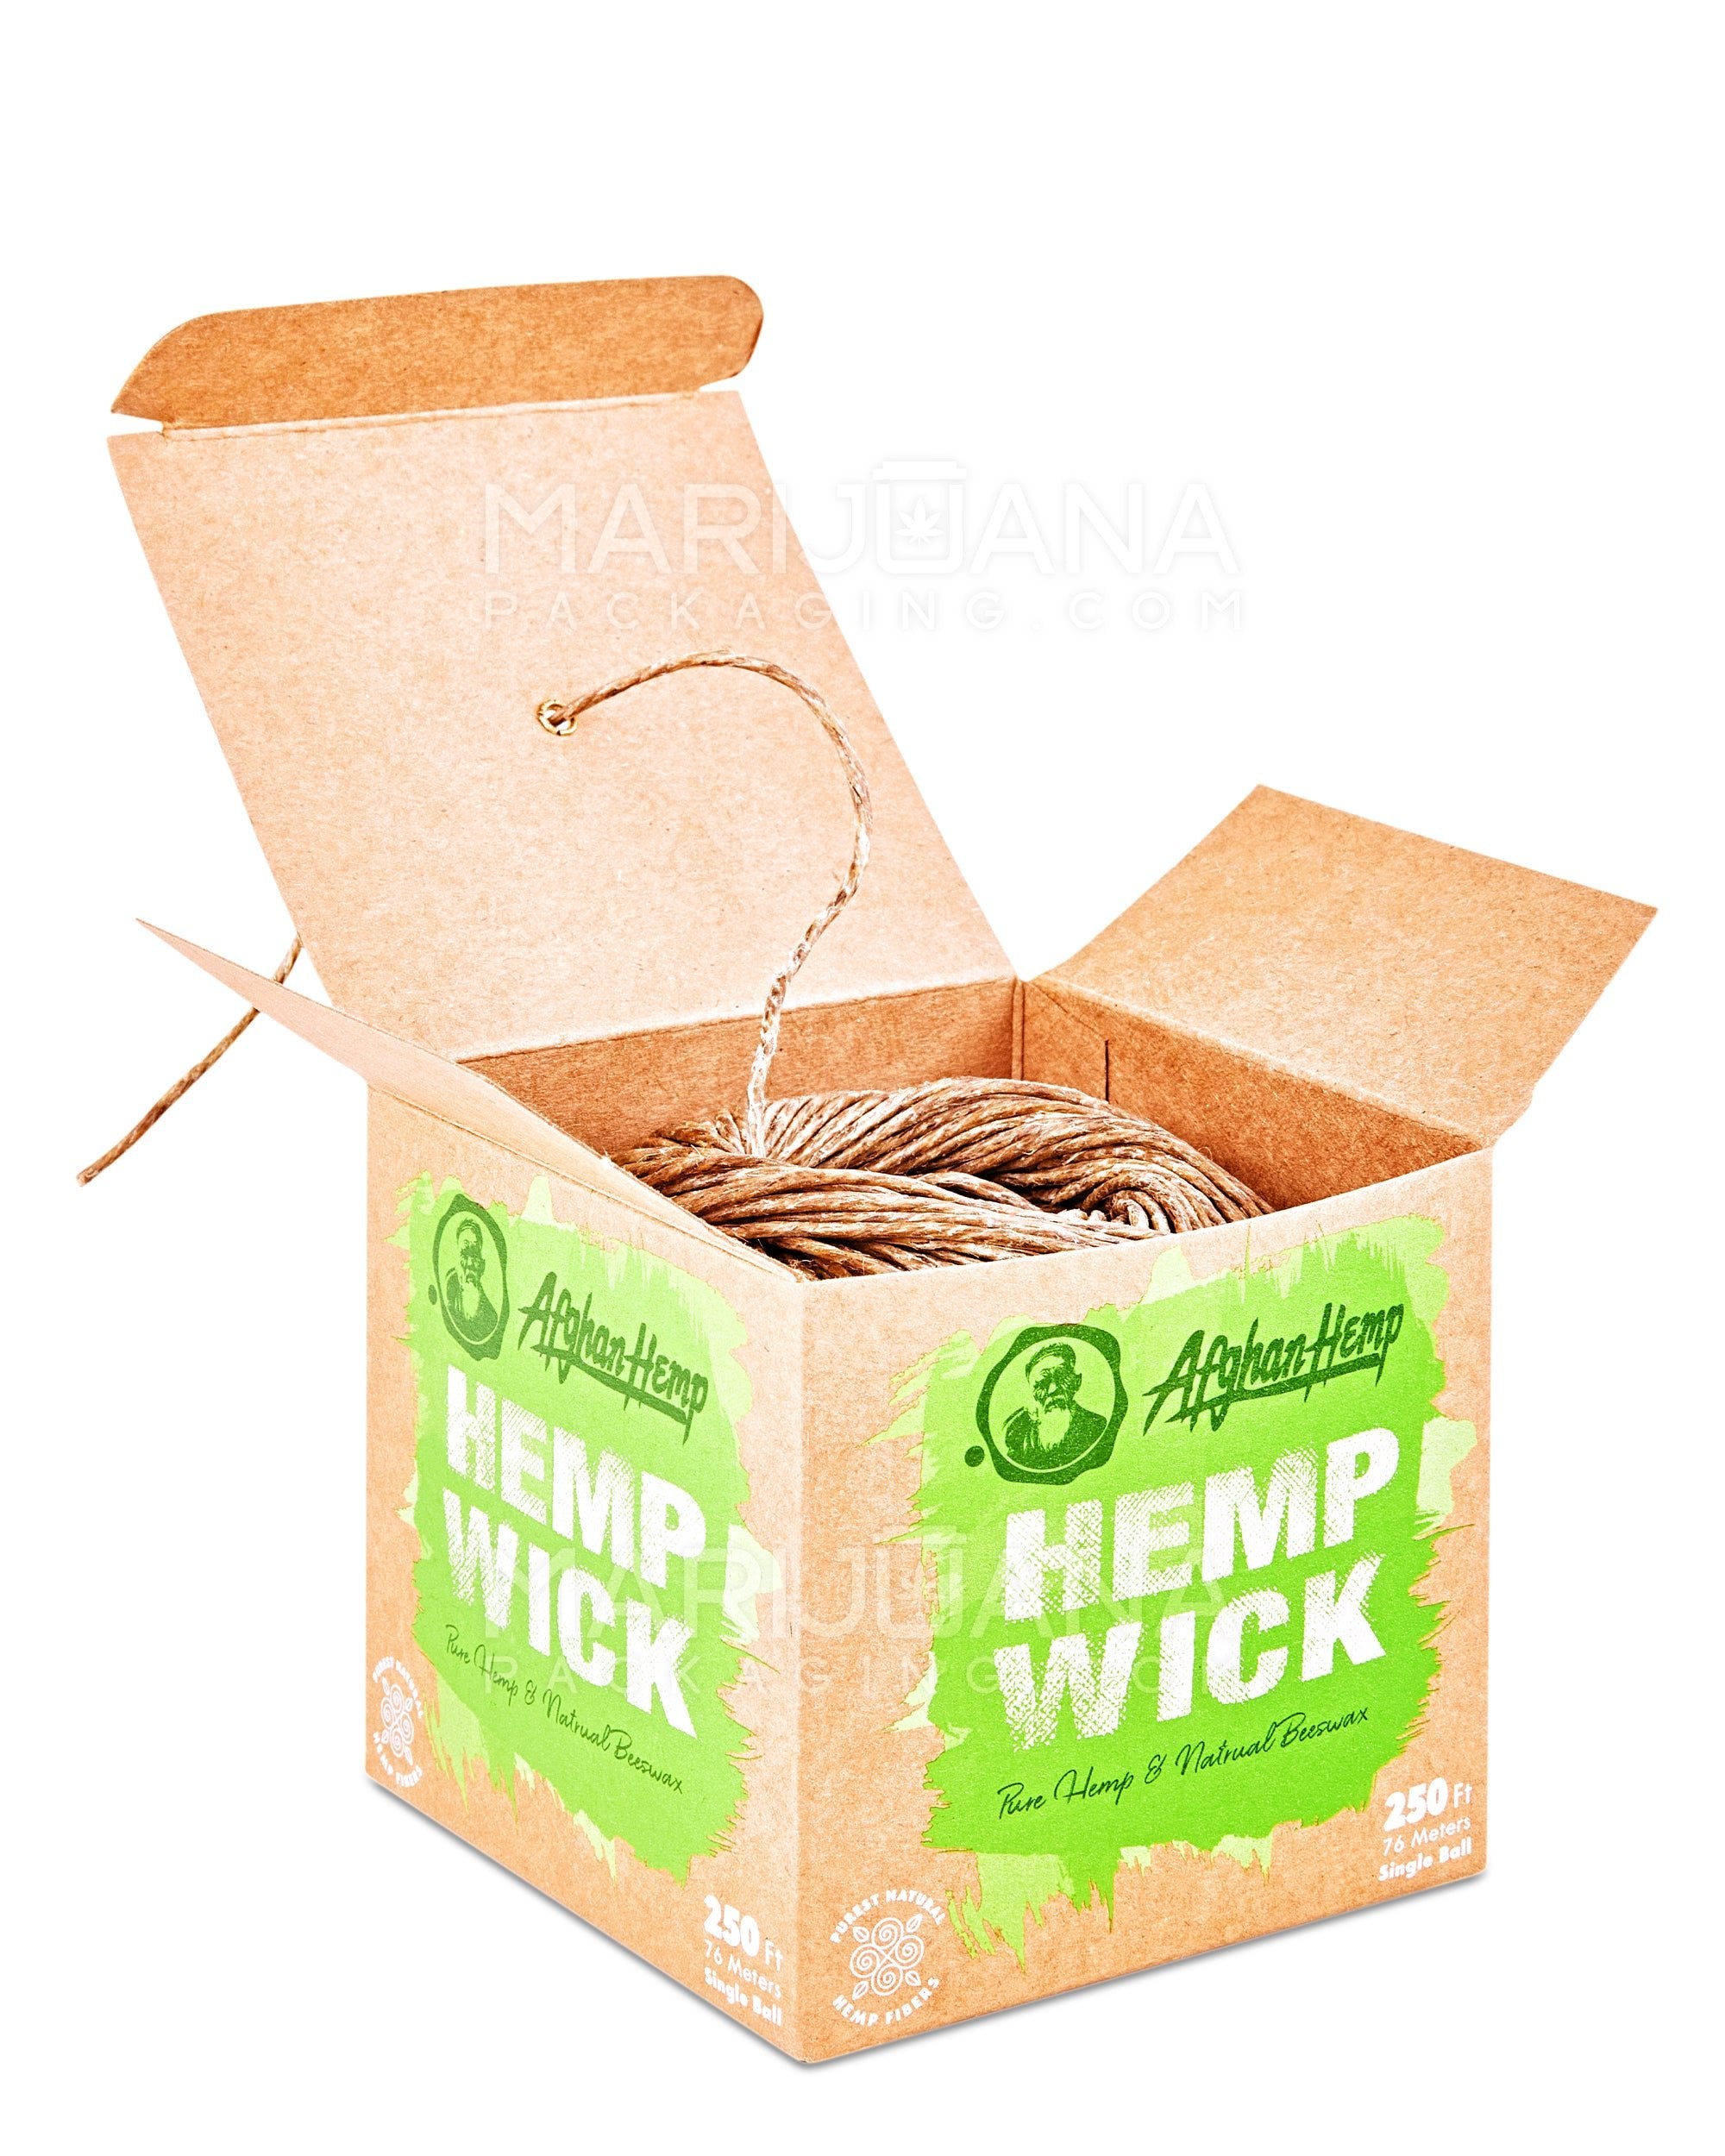 AFGHAN HEMP | Hemp & Beeswax Wick | 250ft Long - All Natural - 1